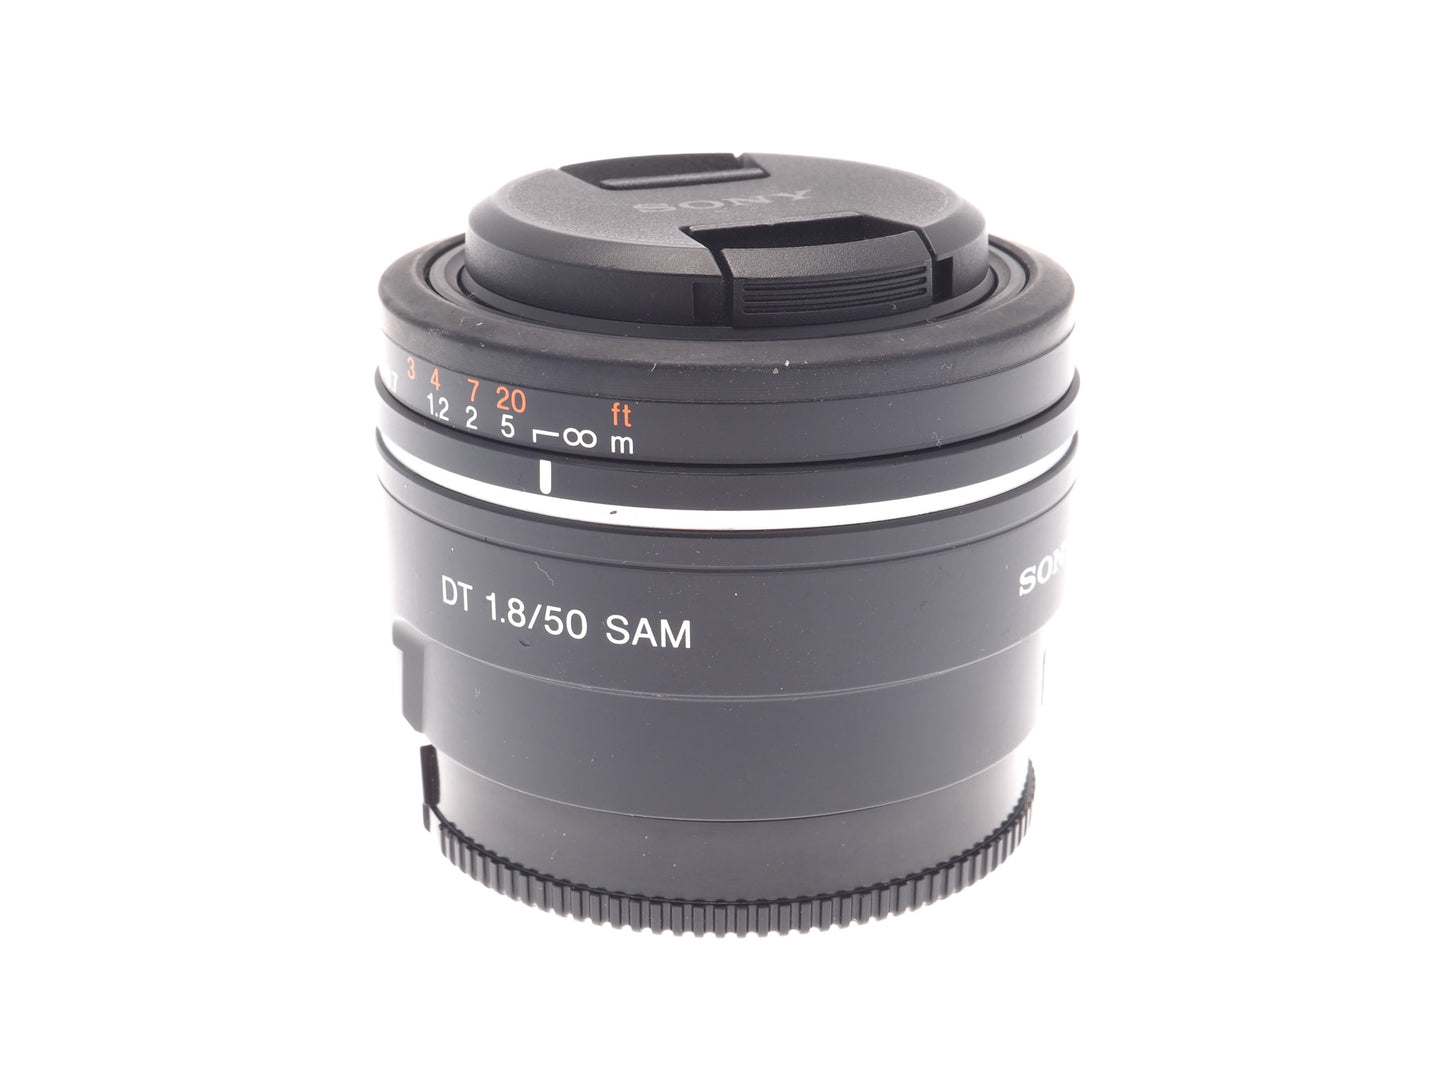 Sony 50mm f1.8 DT SAM